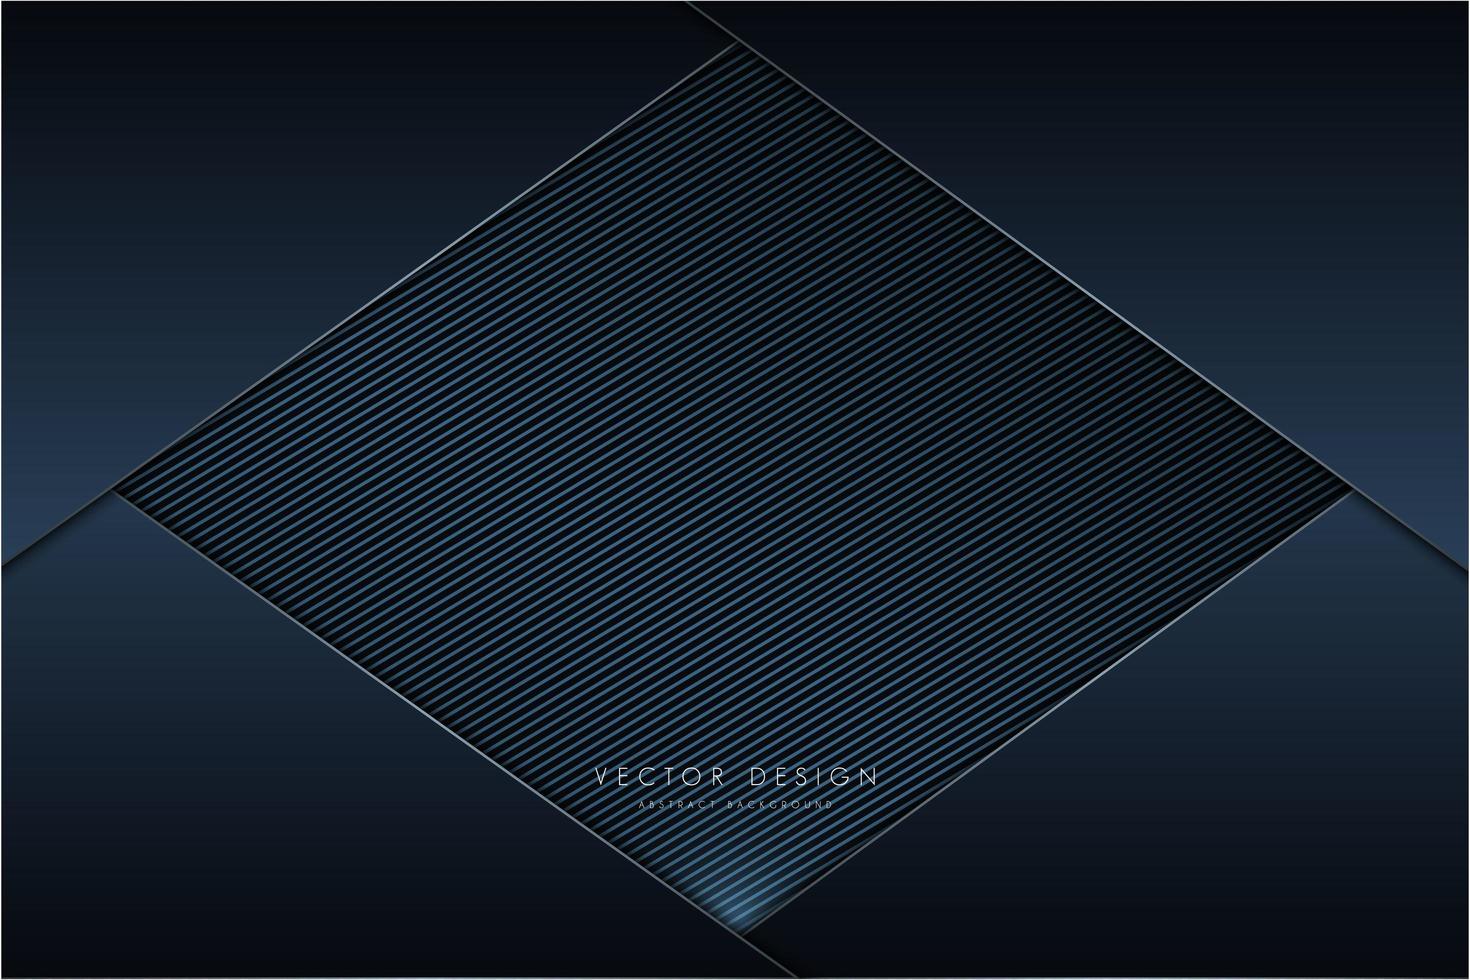 Metallic dark navy panels with carbon fiber diamond vector